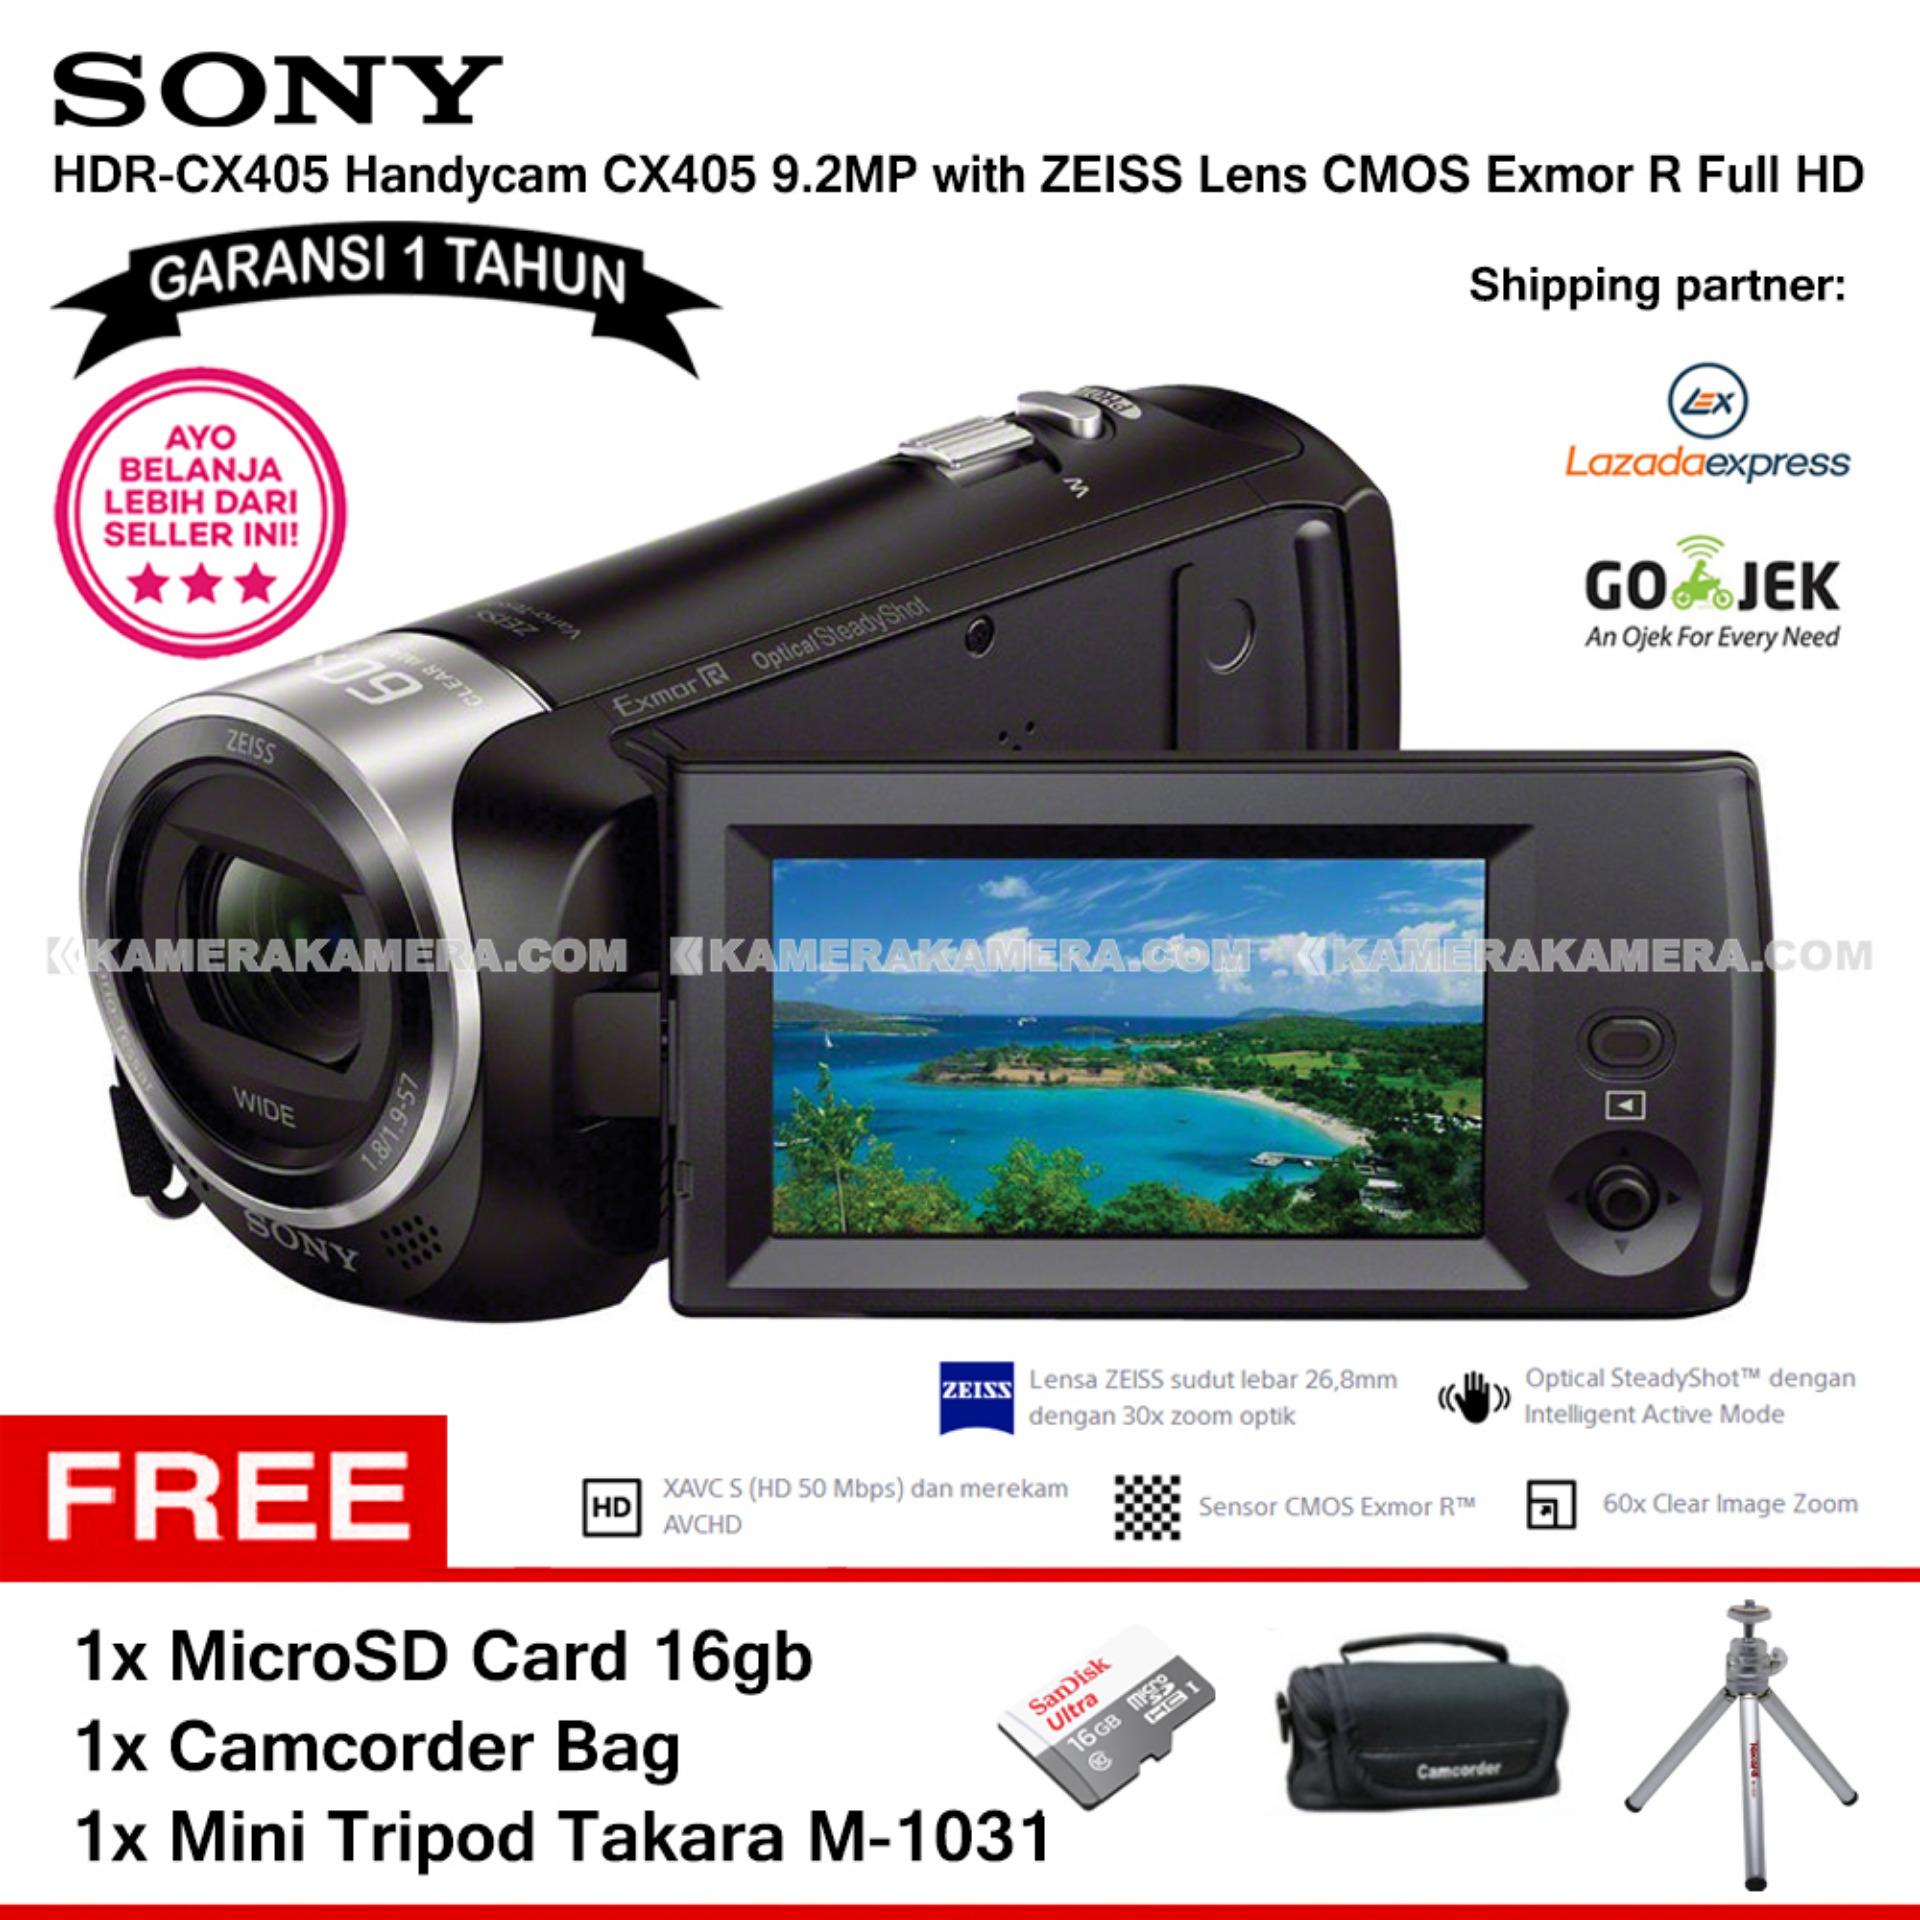 SONY HDR-CX405 Handycam CX405 9.2MP with ZEISS Lens CMOS Exmor R Full HD (Garansi 1th) + MicroSD Card 16gb + Camcorder Bag + Mini Tripod Takara M-1031